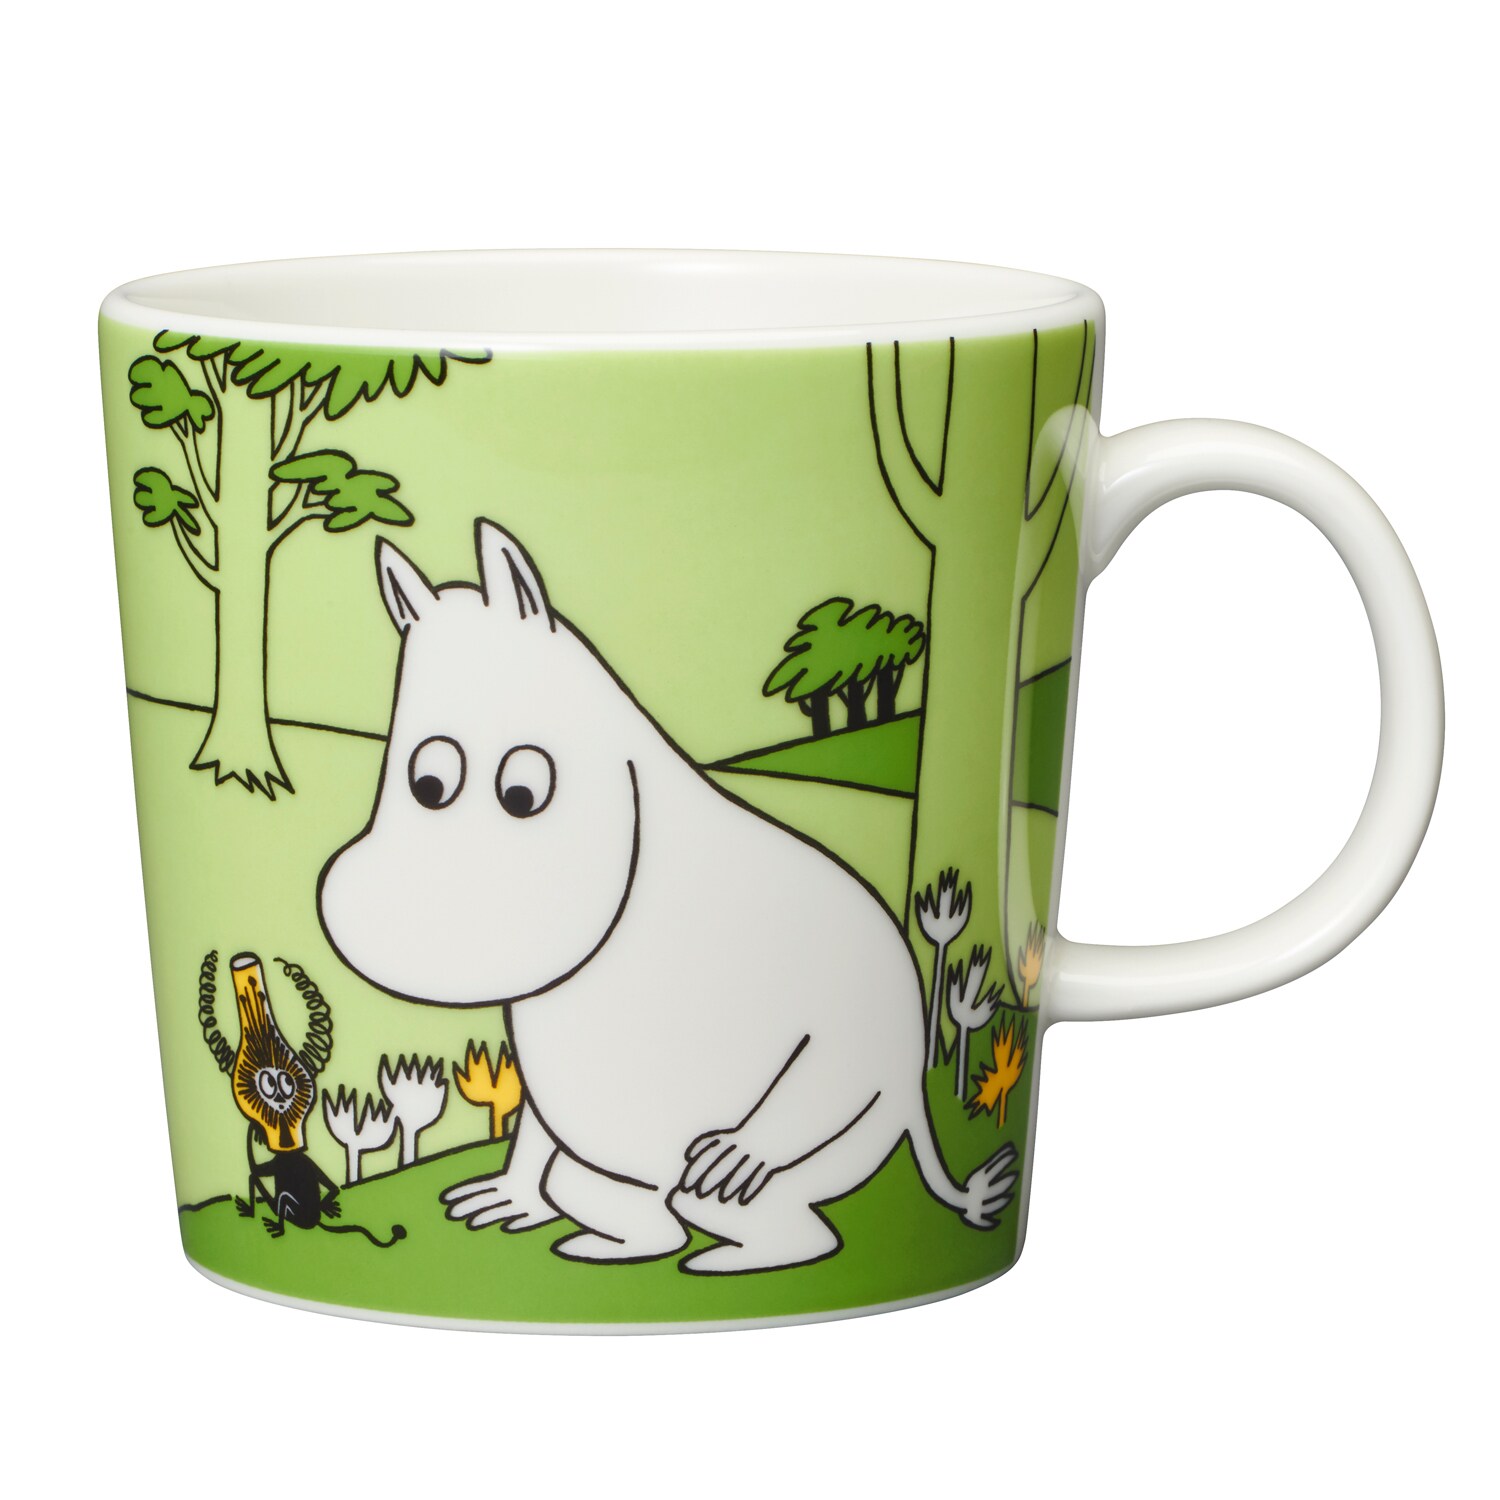 All Current Regular Moomin Mugs from Arabia 18 Mugs